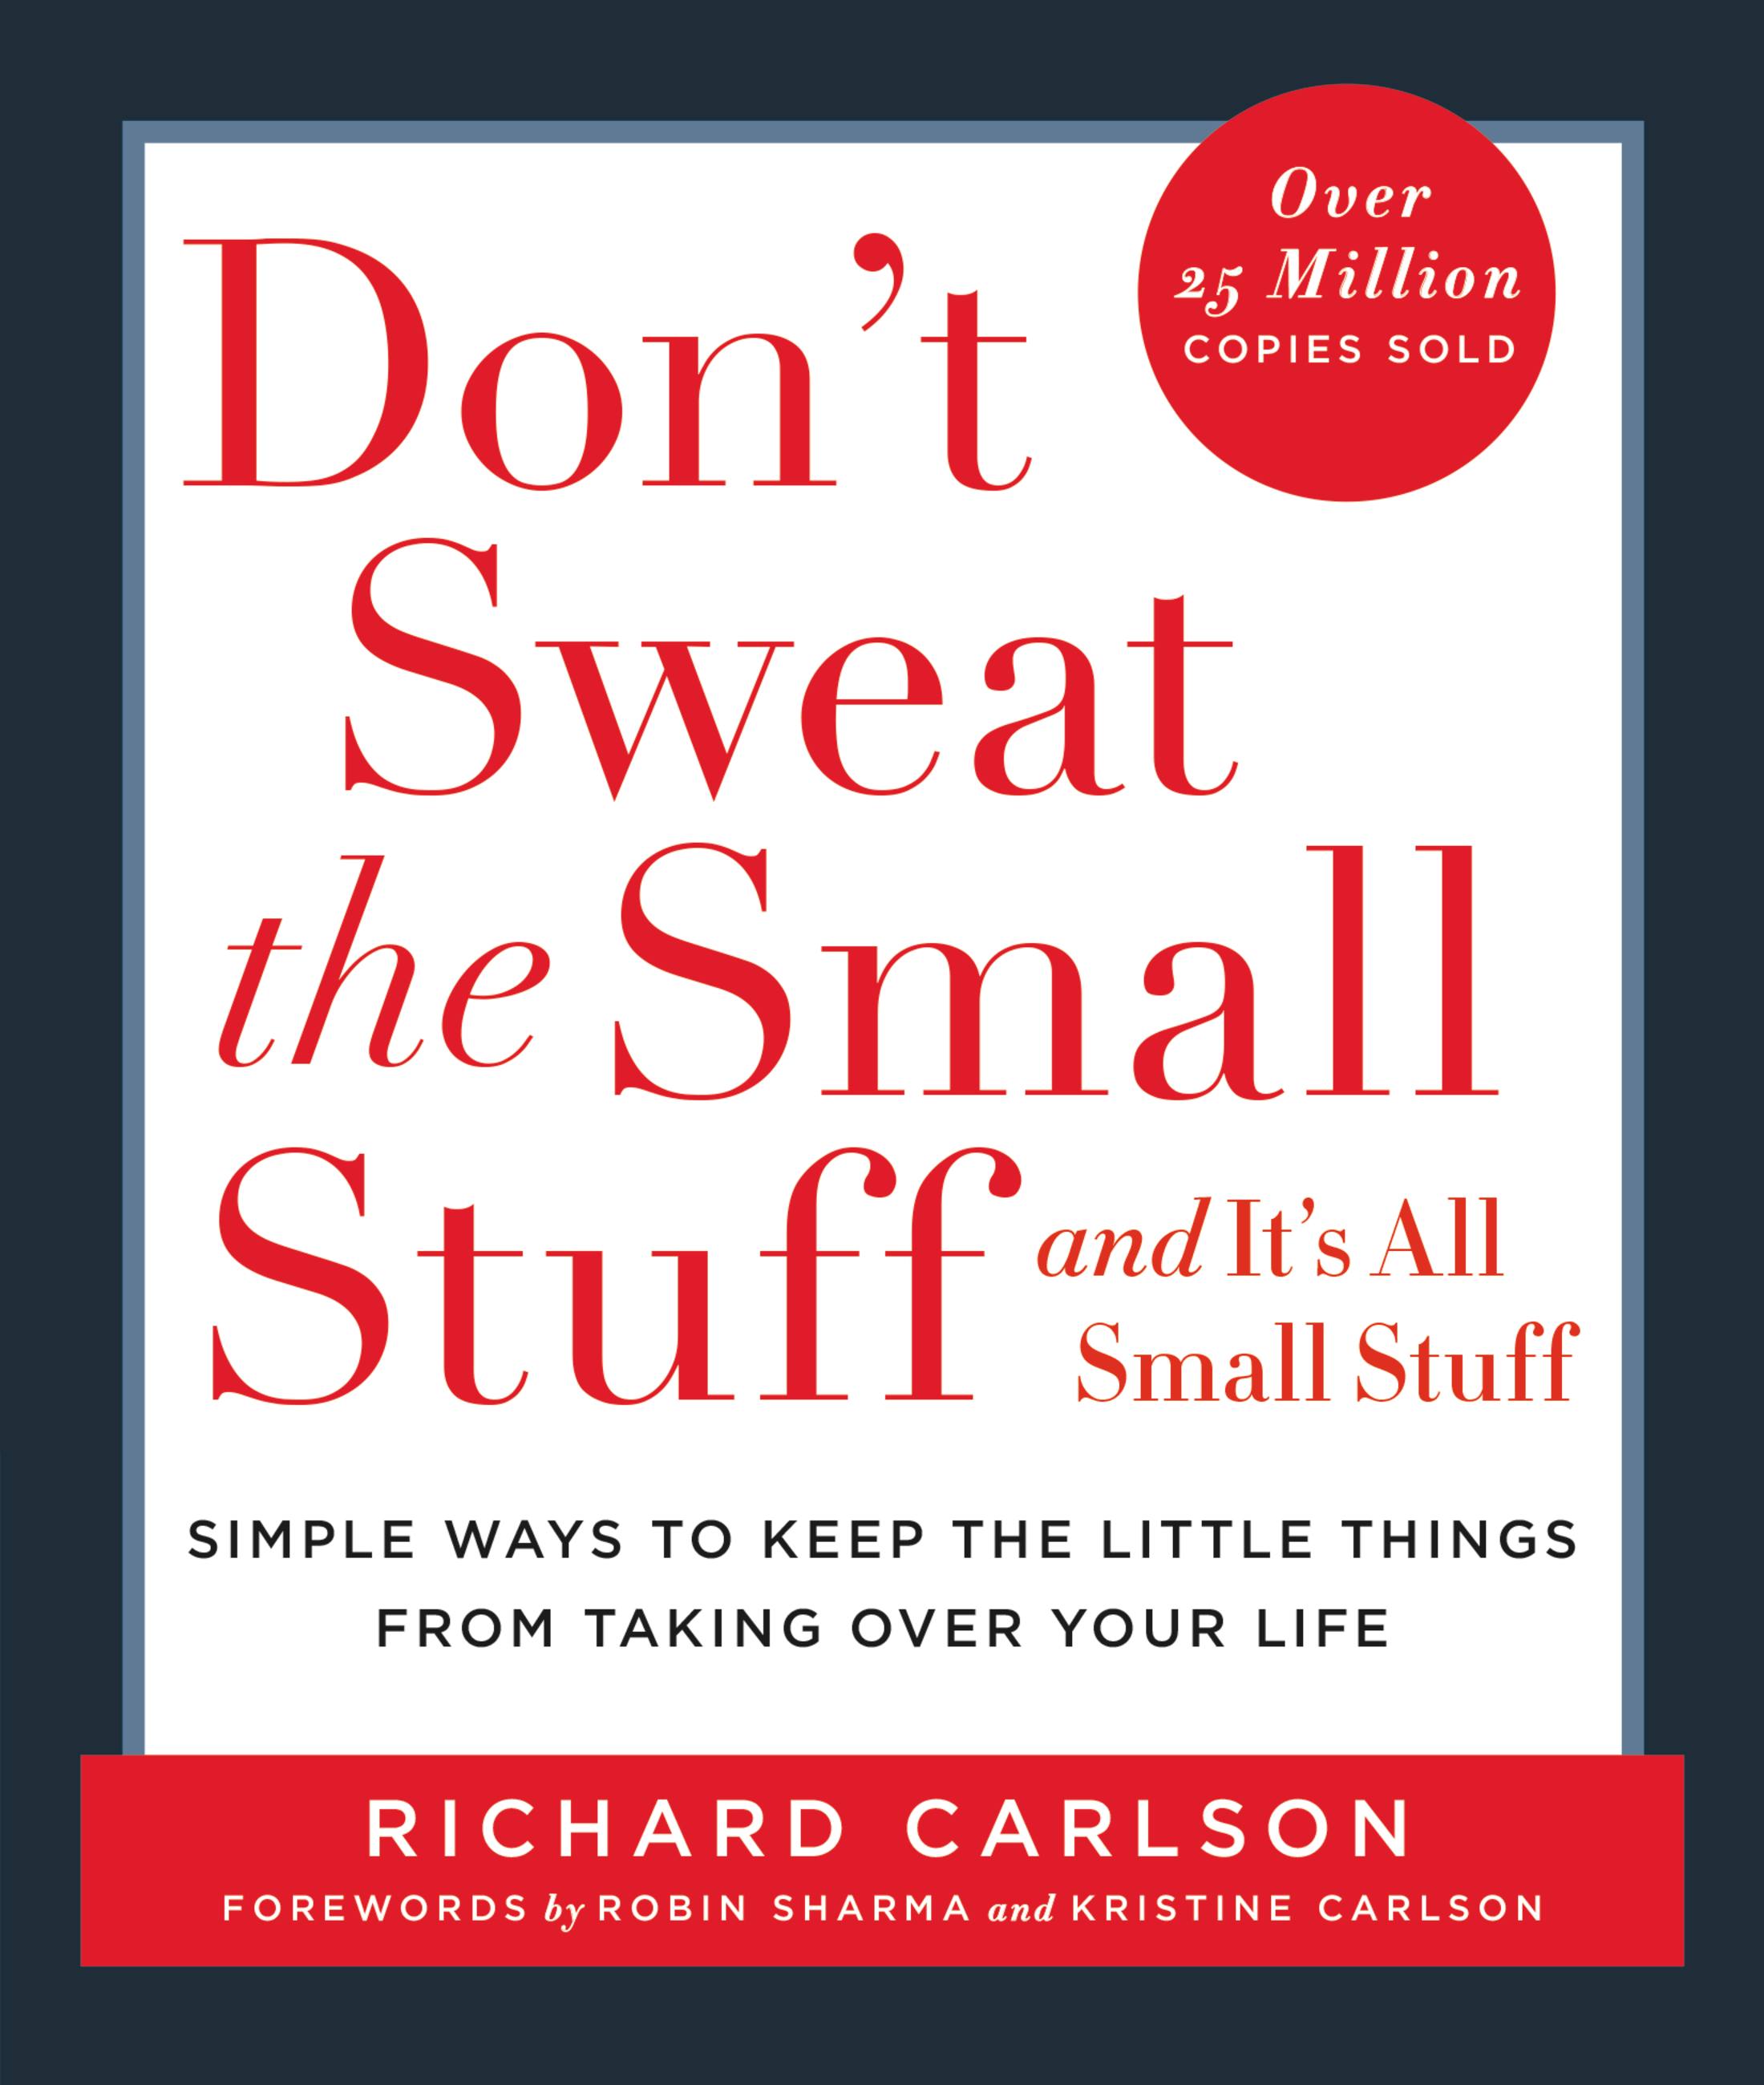 Don't Sweat the Small Stuff book art